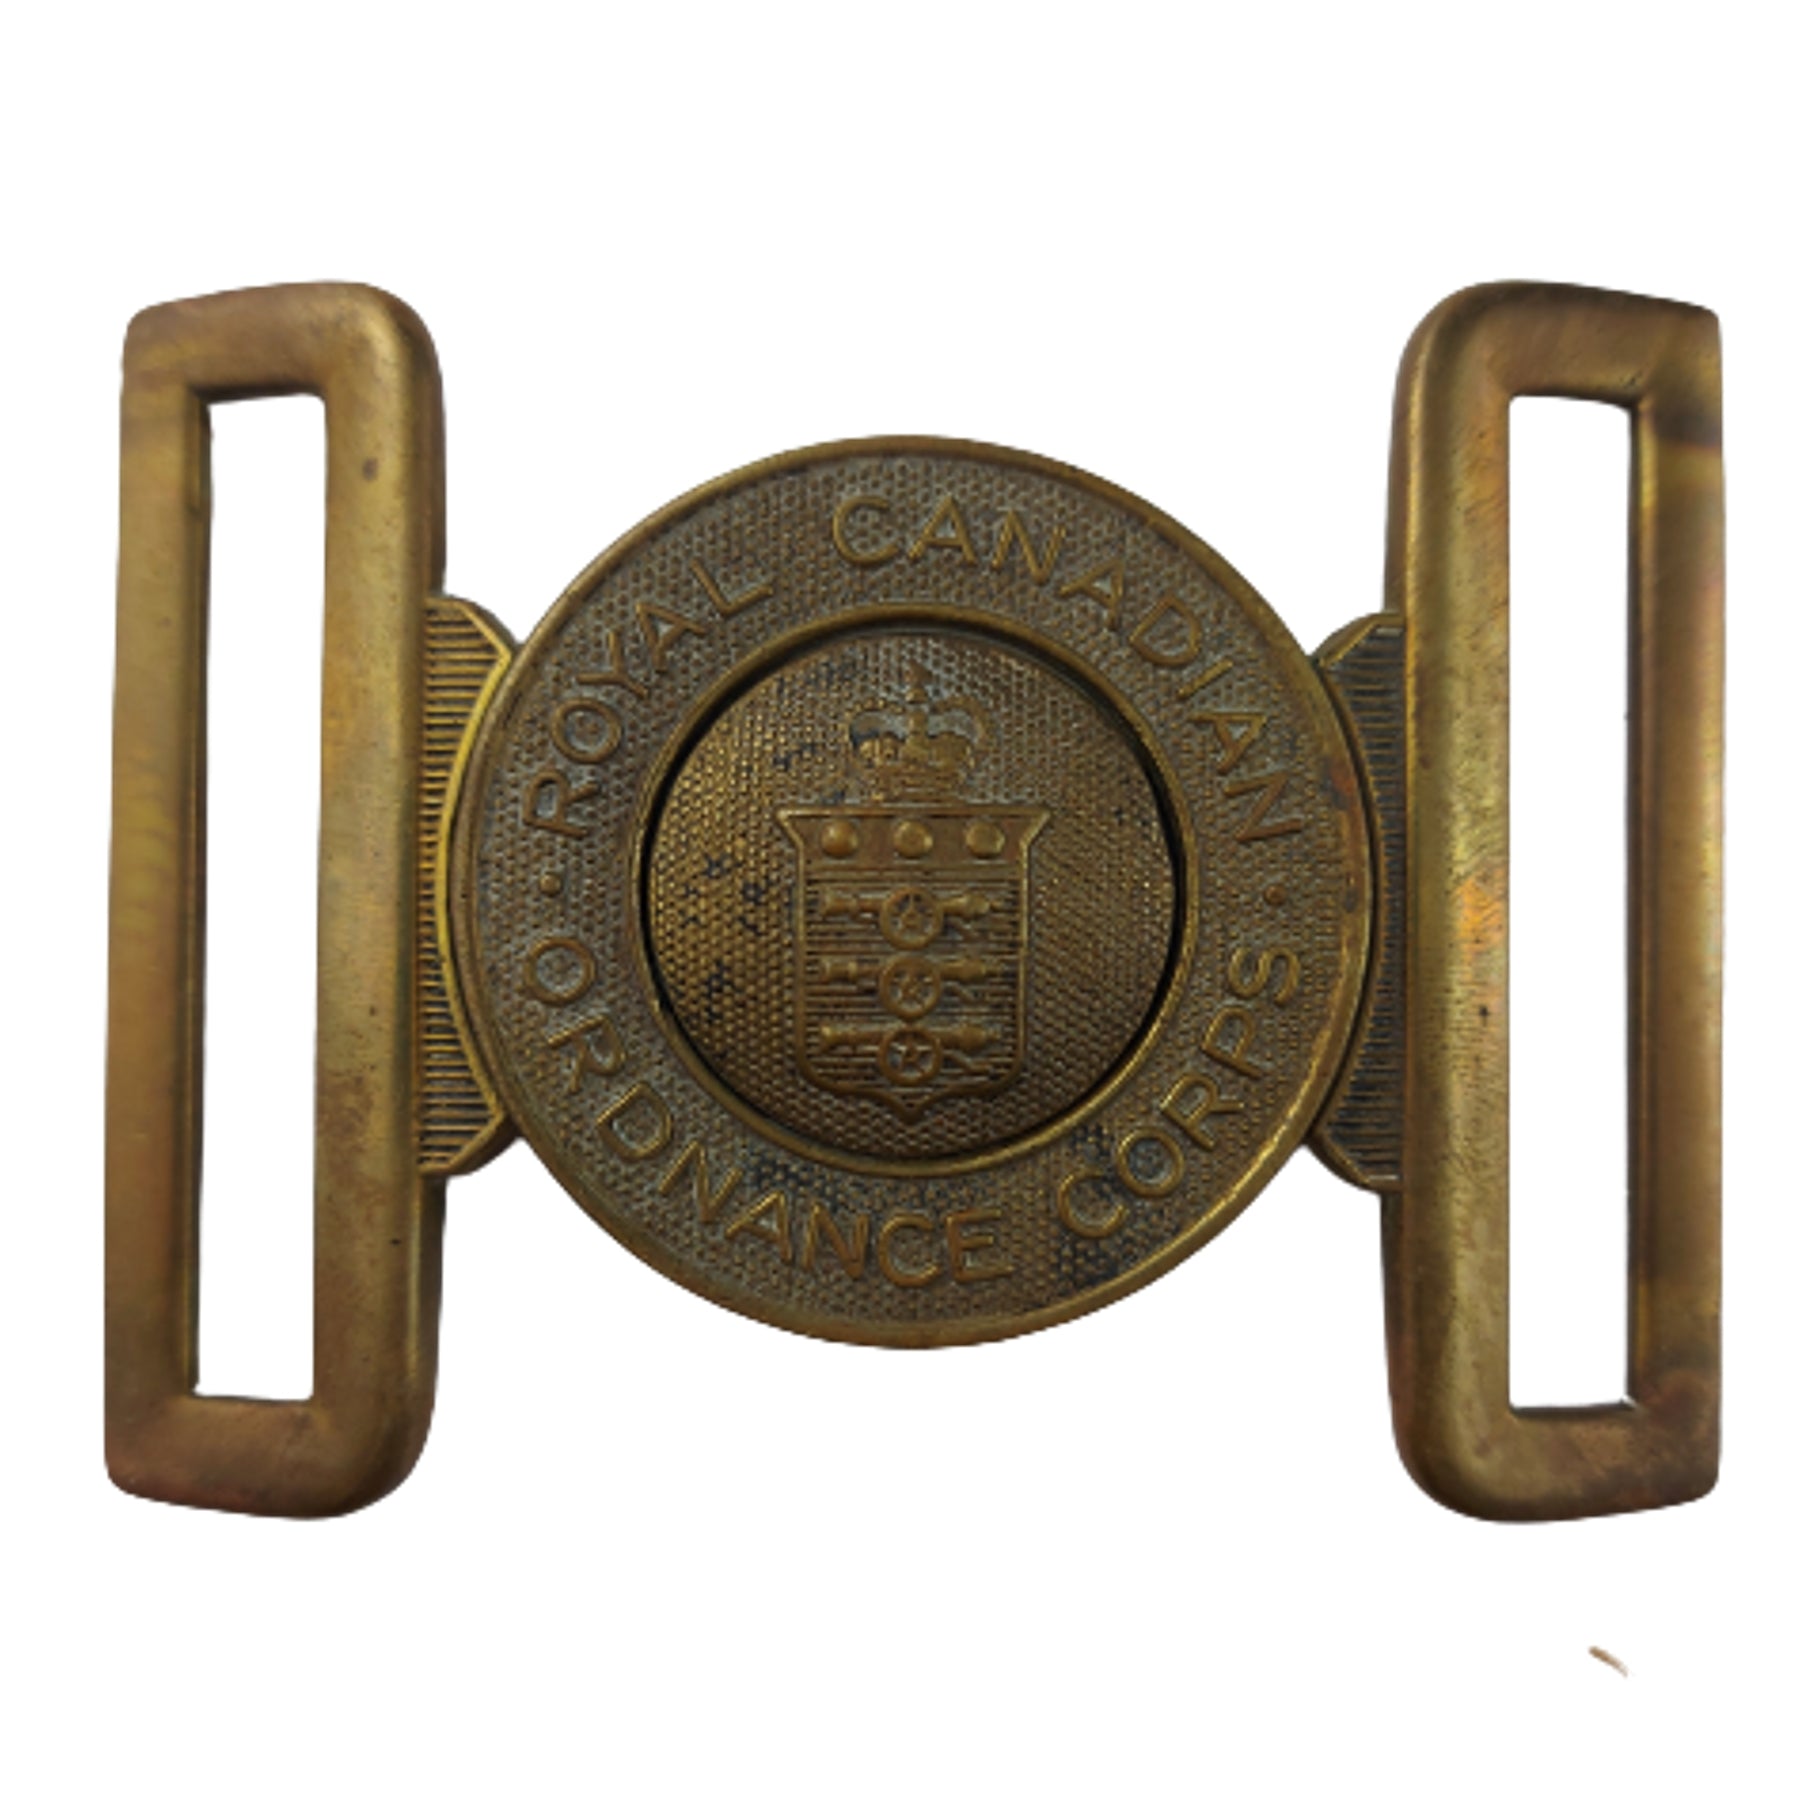 Civil War Belt Buckle. This is a civil war belt buckle it is brass